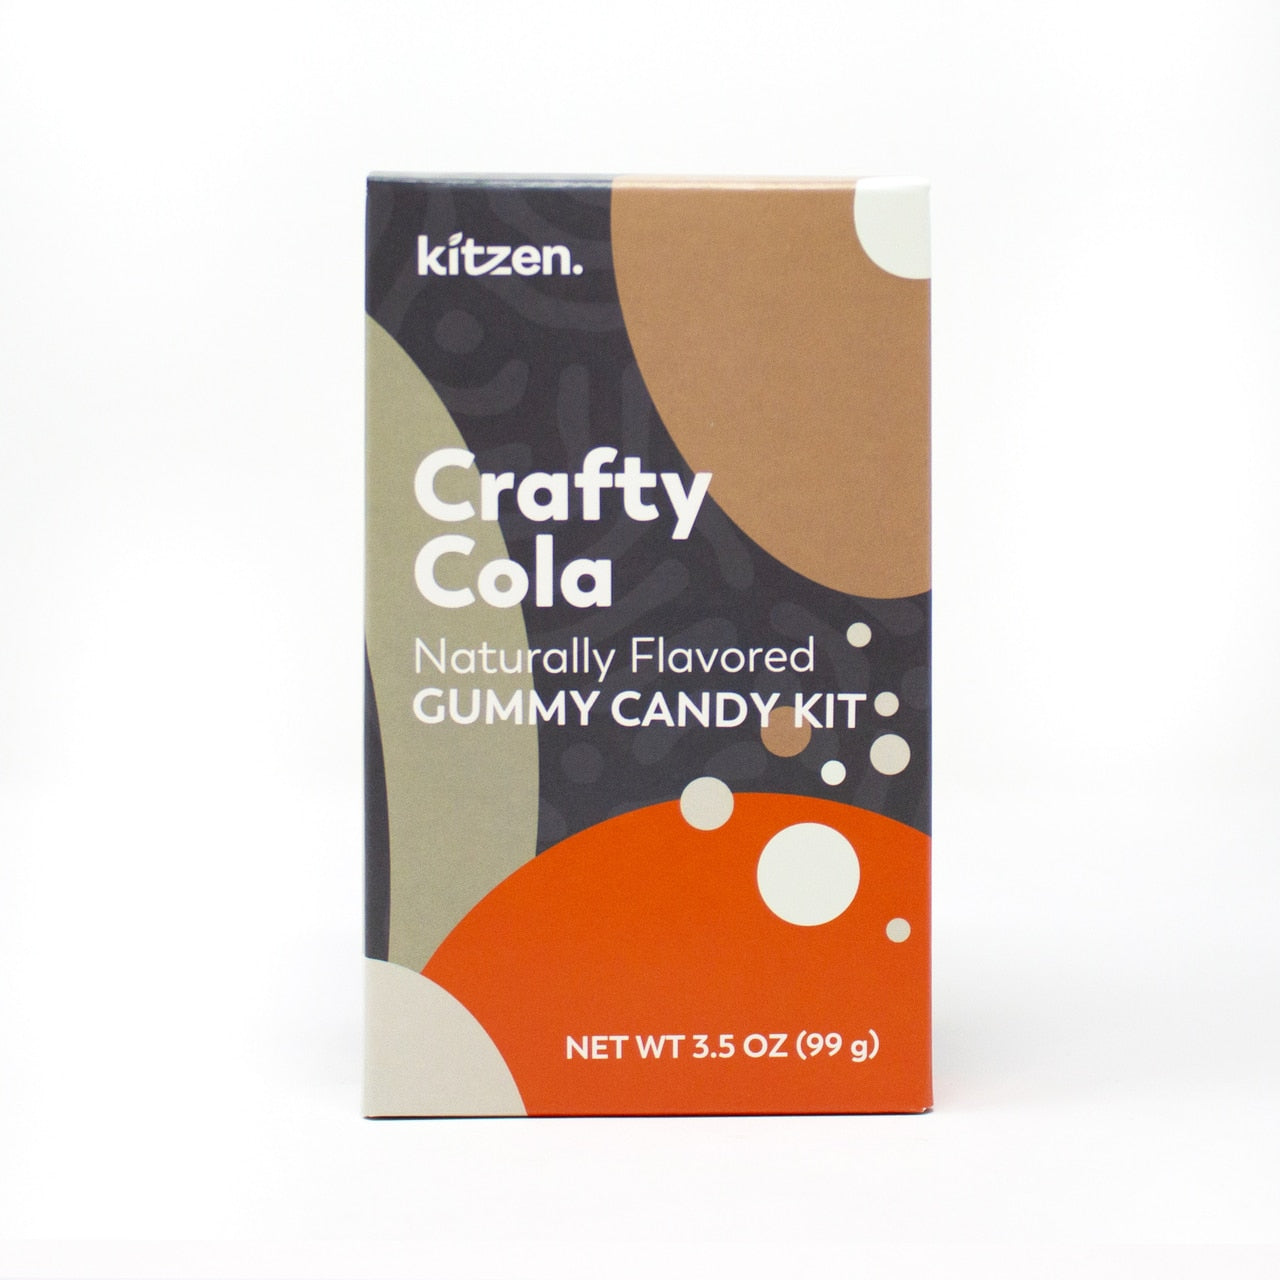 kitzen gummy candy kit crafty cola